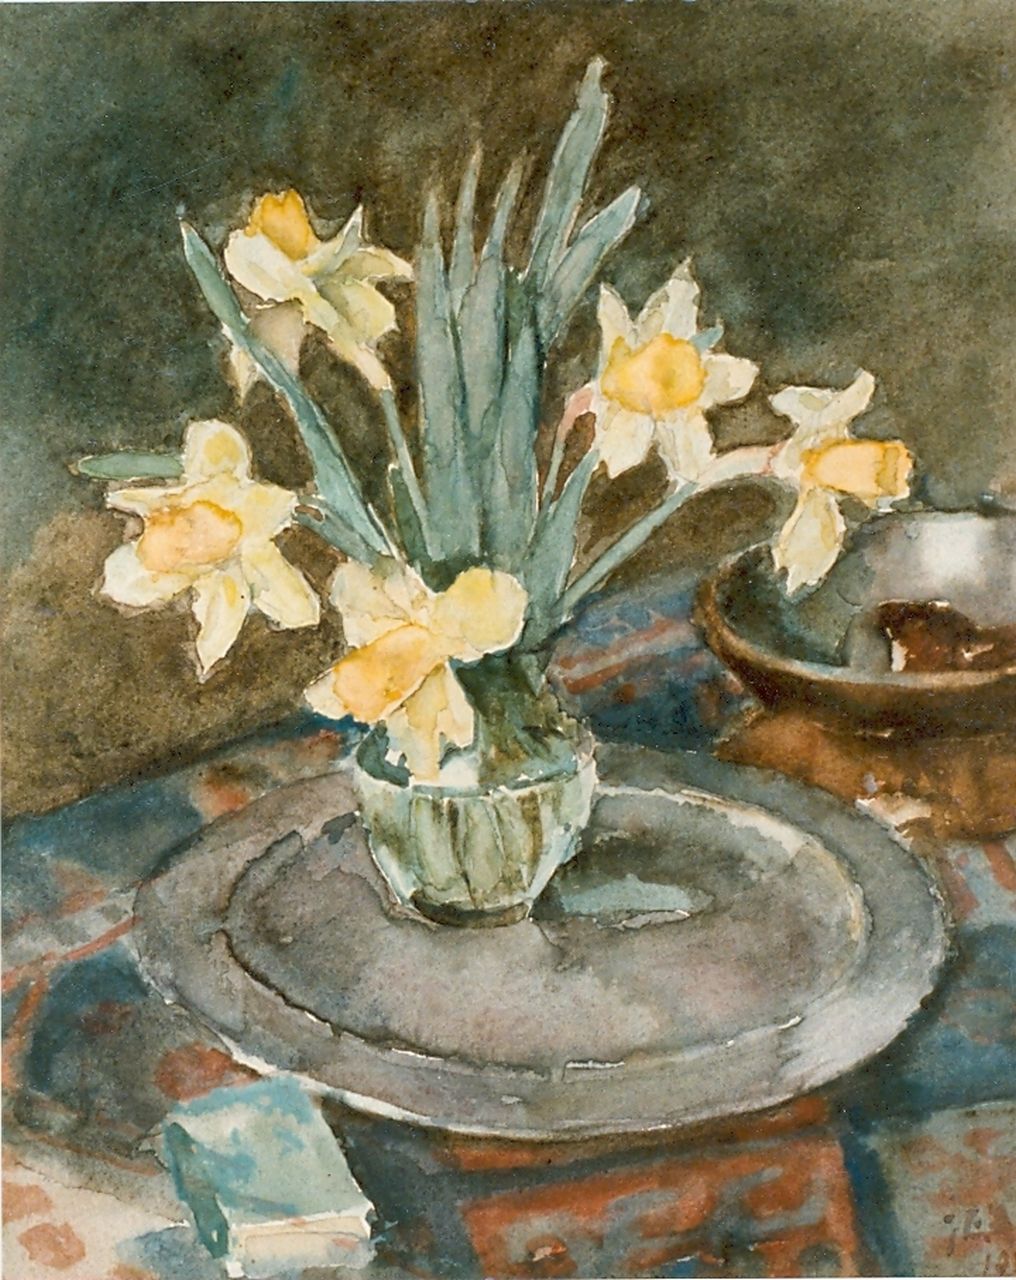 Akkeringa J.E.  | Johannes Evert 'Jan' Akkeringa, Daffodils in a vase, Aquarell auf Papier 31,0 x 26,0 cm, signed l.r. und dated 1952